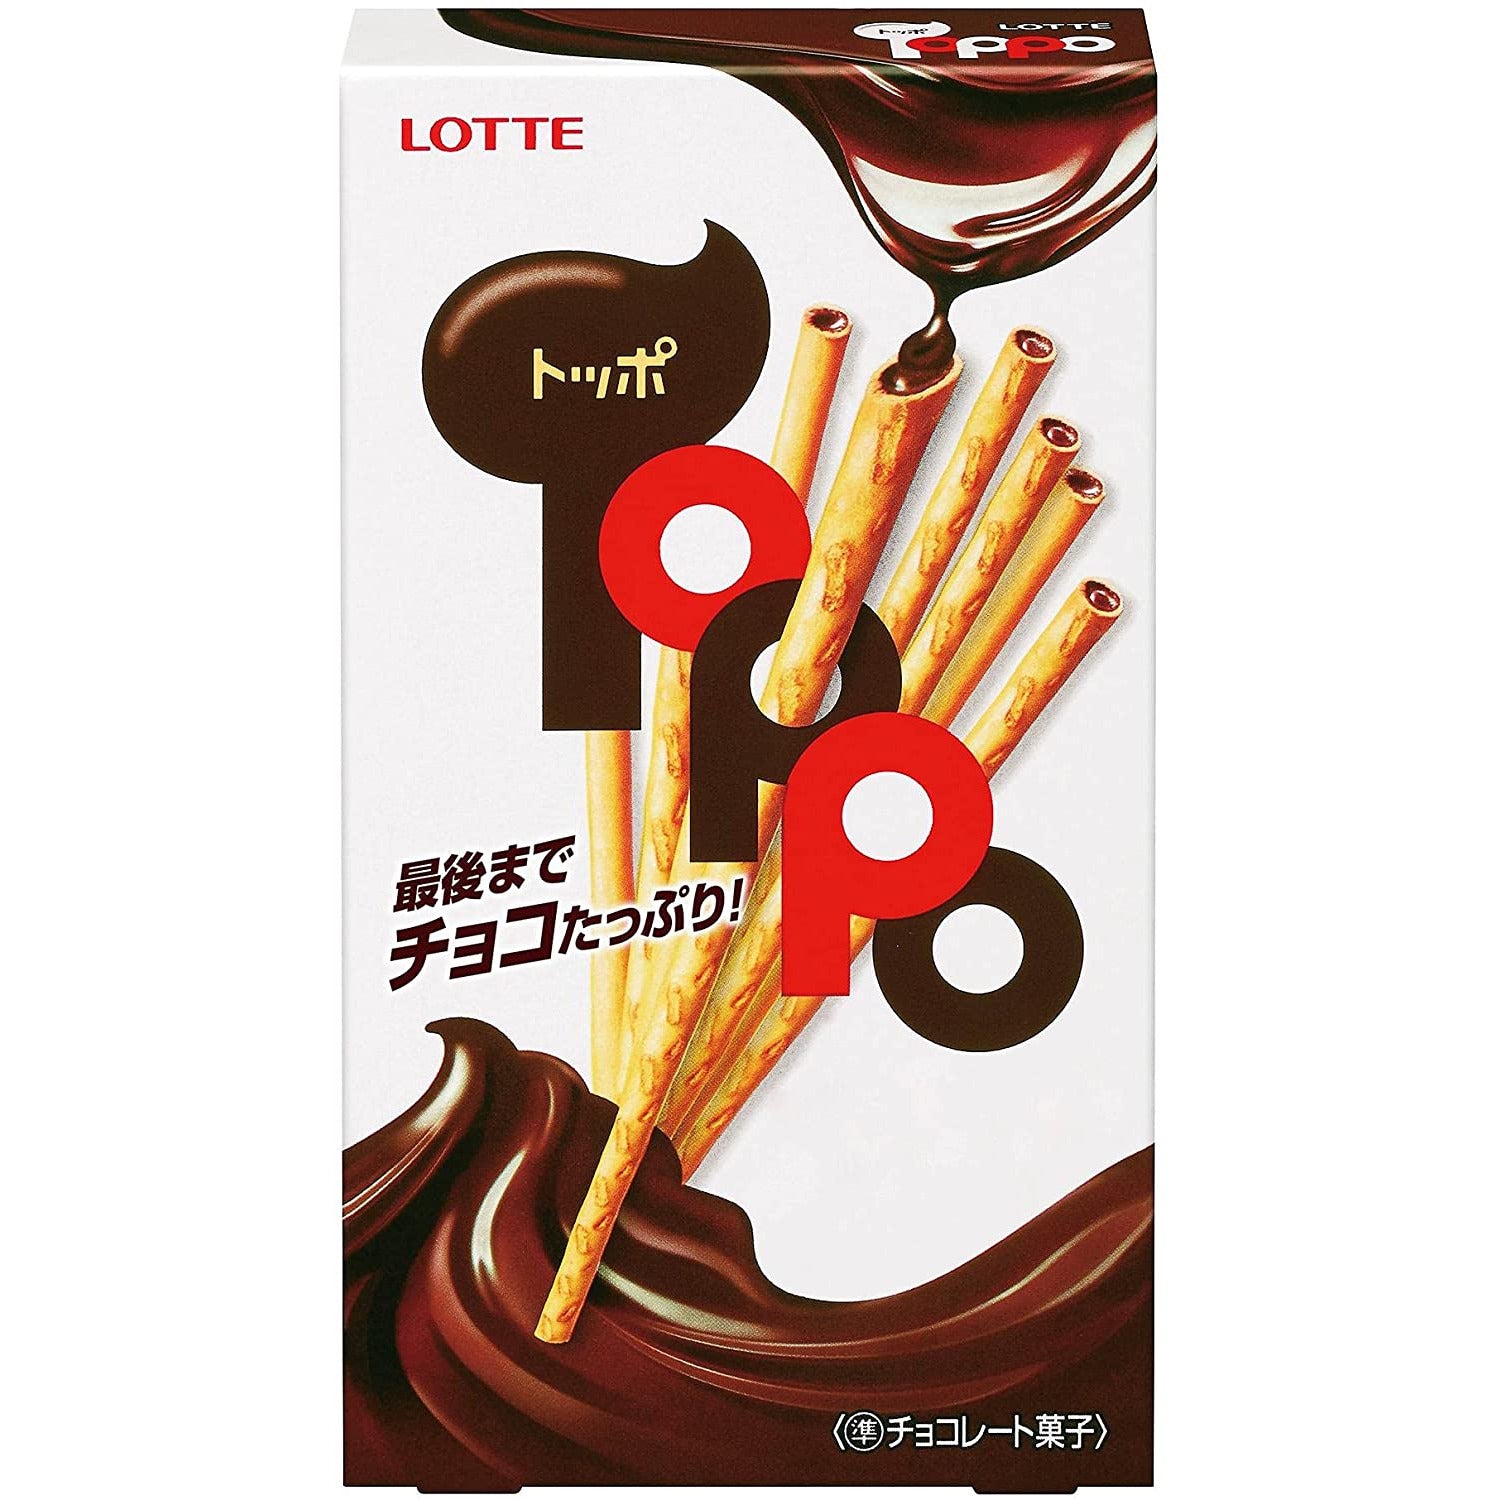 Lotte Toppo milk chocolate cookie sticks 72g